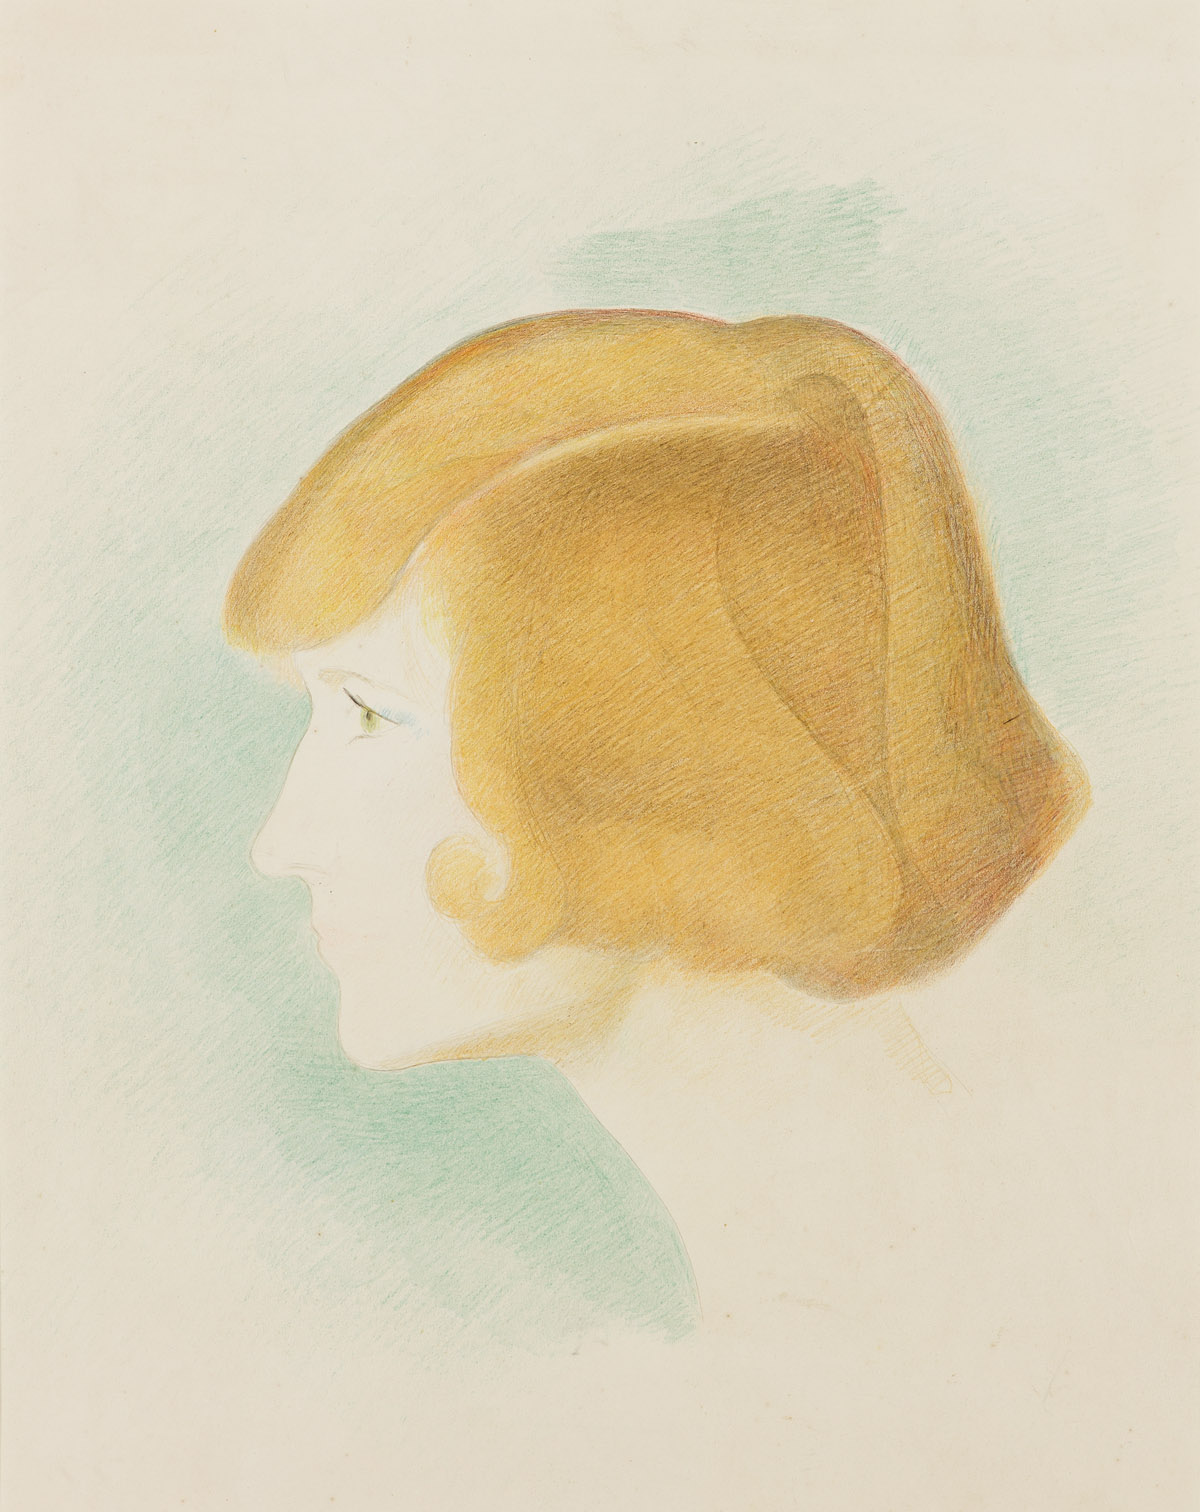 JOSEPH STELLA (1877 - 1946, ITALIAN/AMERICAN) Portrait of a young girl.